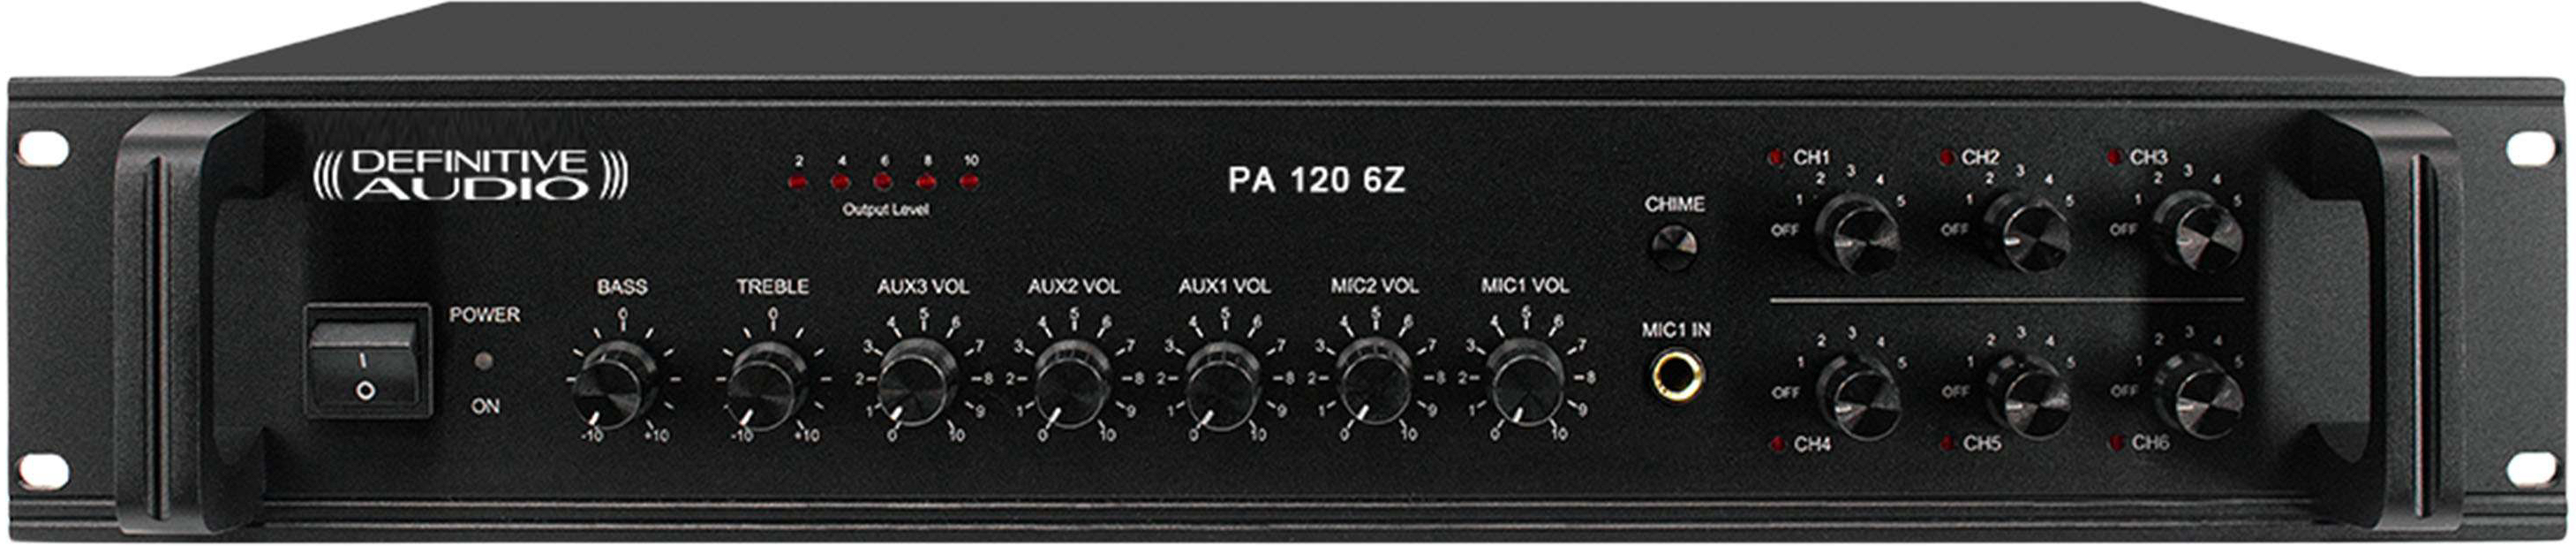 Definitive Audio Pa 120 6z - Ampli Puissance Sono Multi-canaux - Main picture